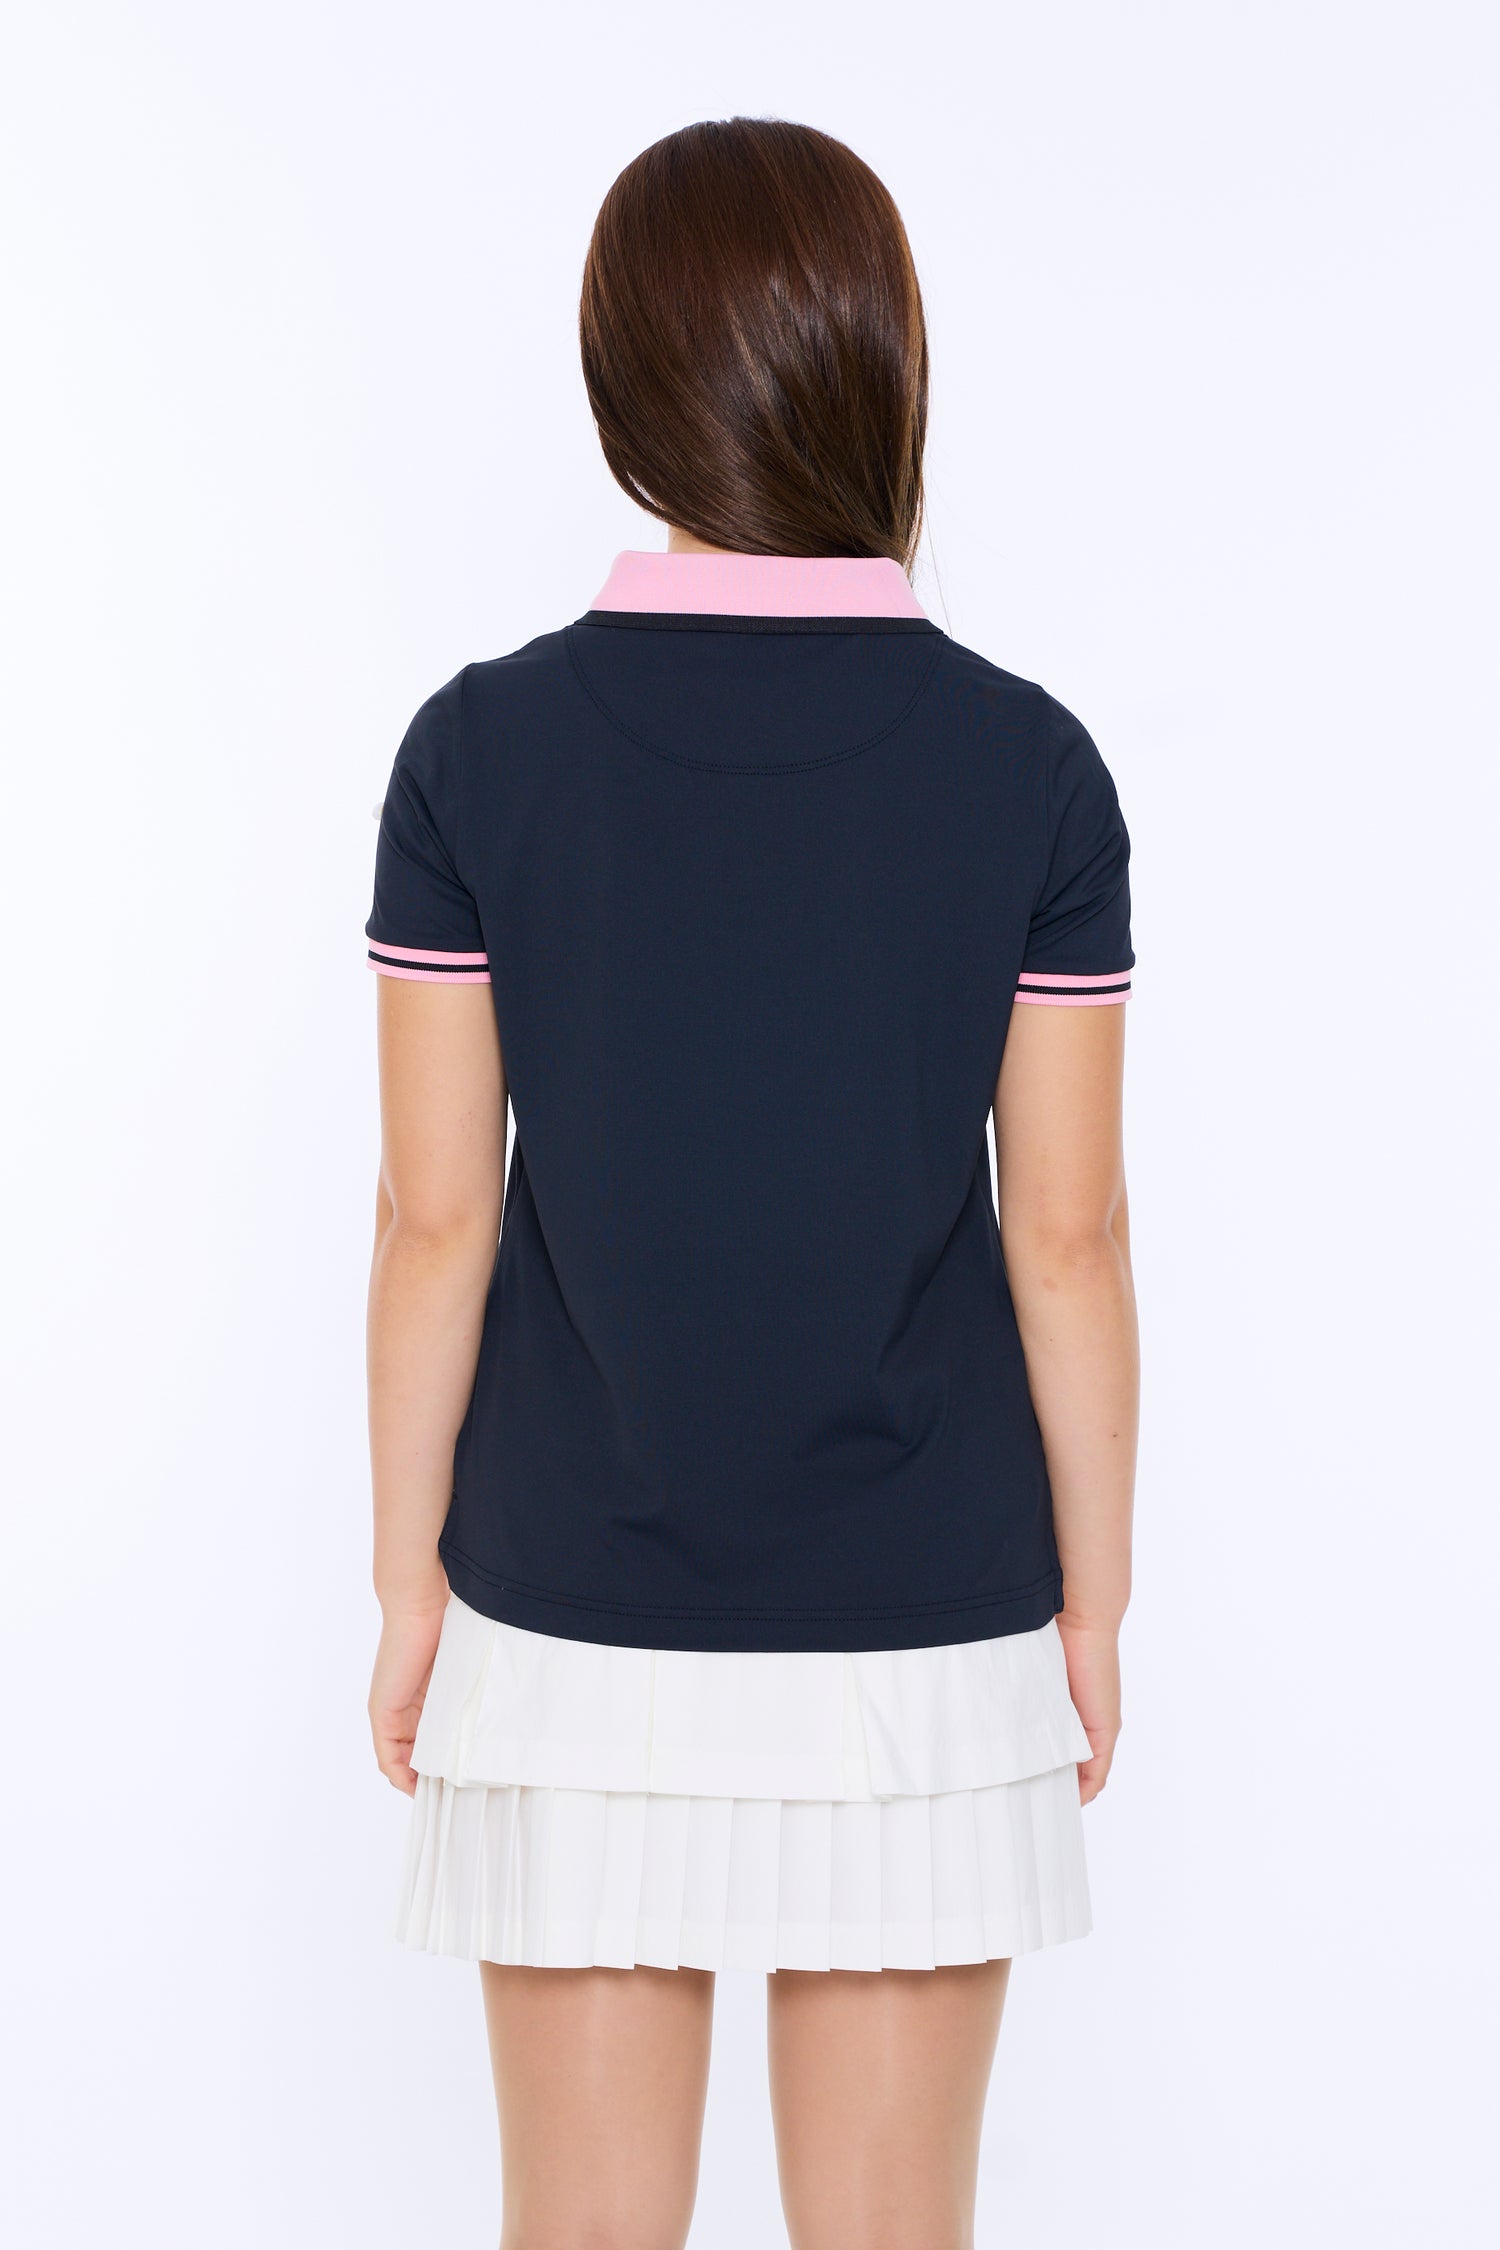 Cleric 短袖 Polo 衫 (701H2010)